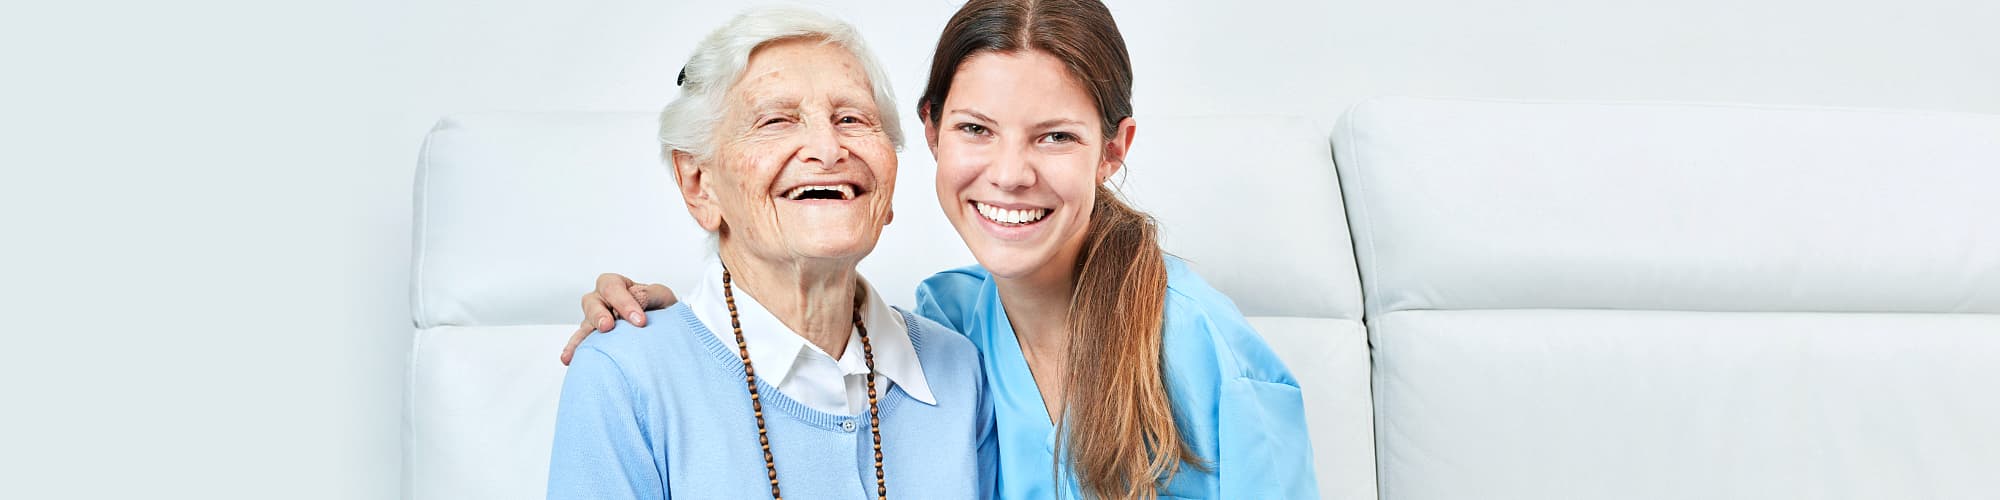 portrait  of caregiver and senior woman smiling